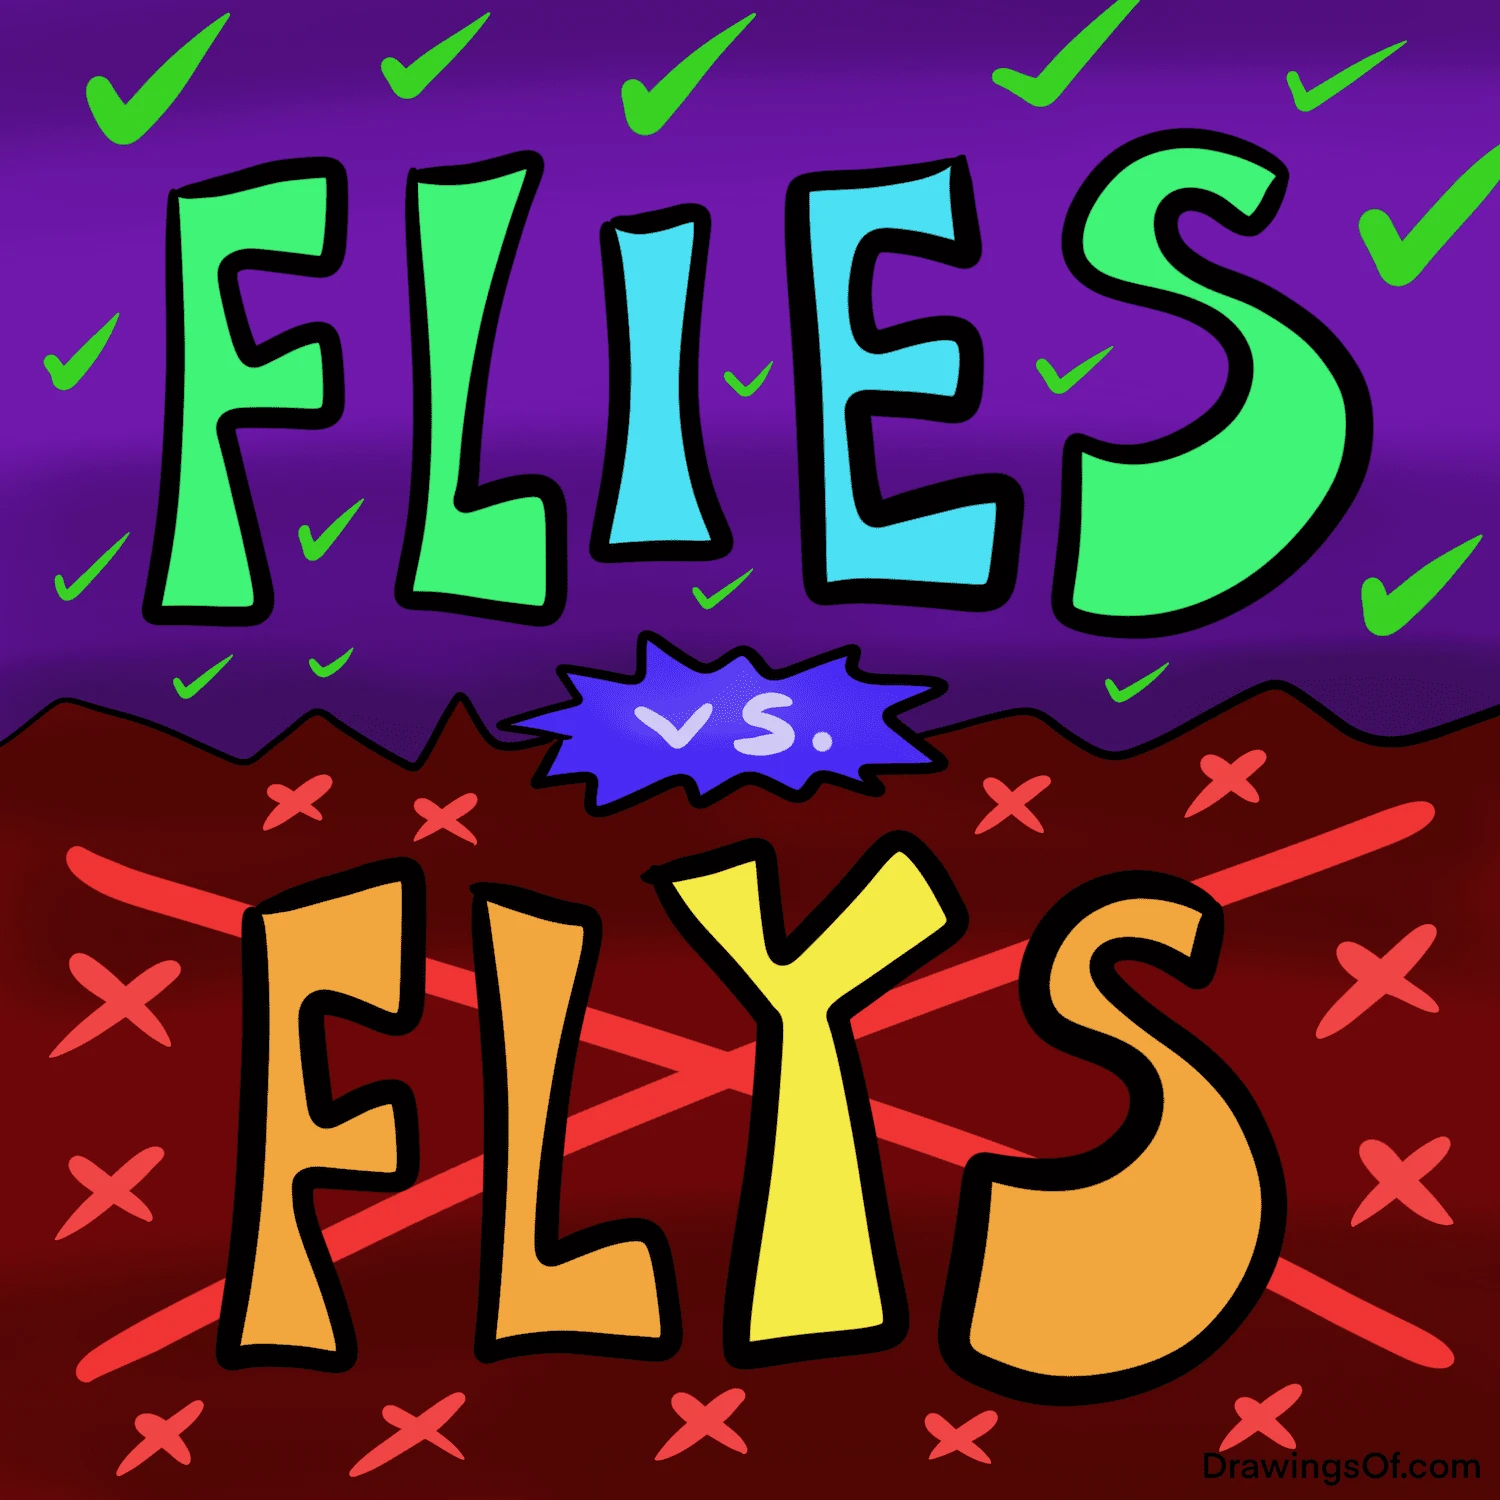 Flies vs flys